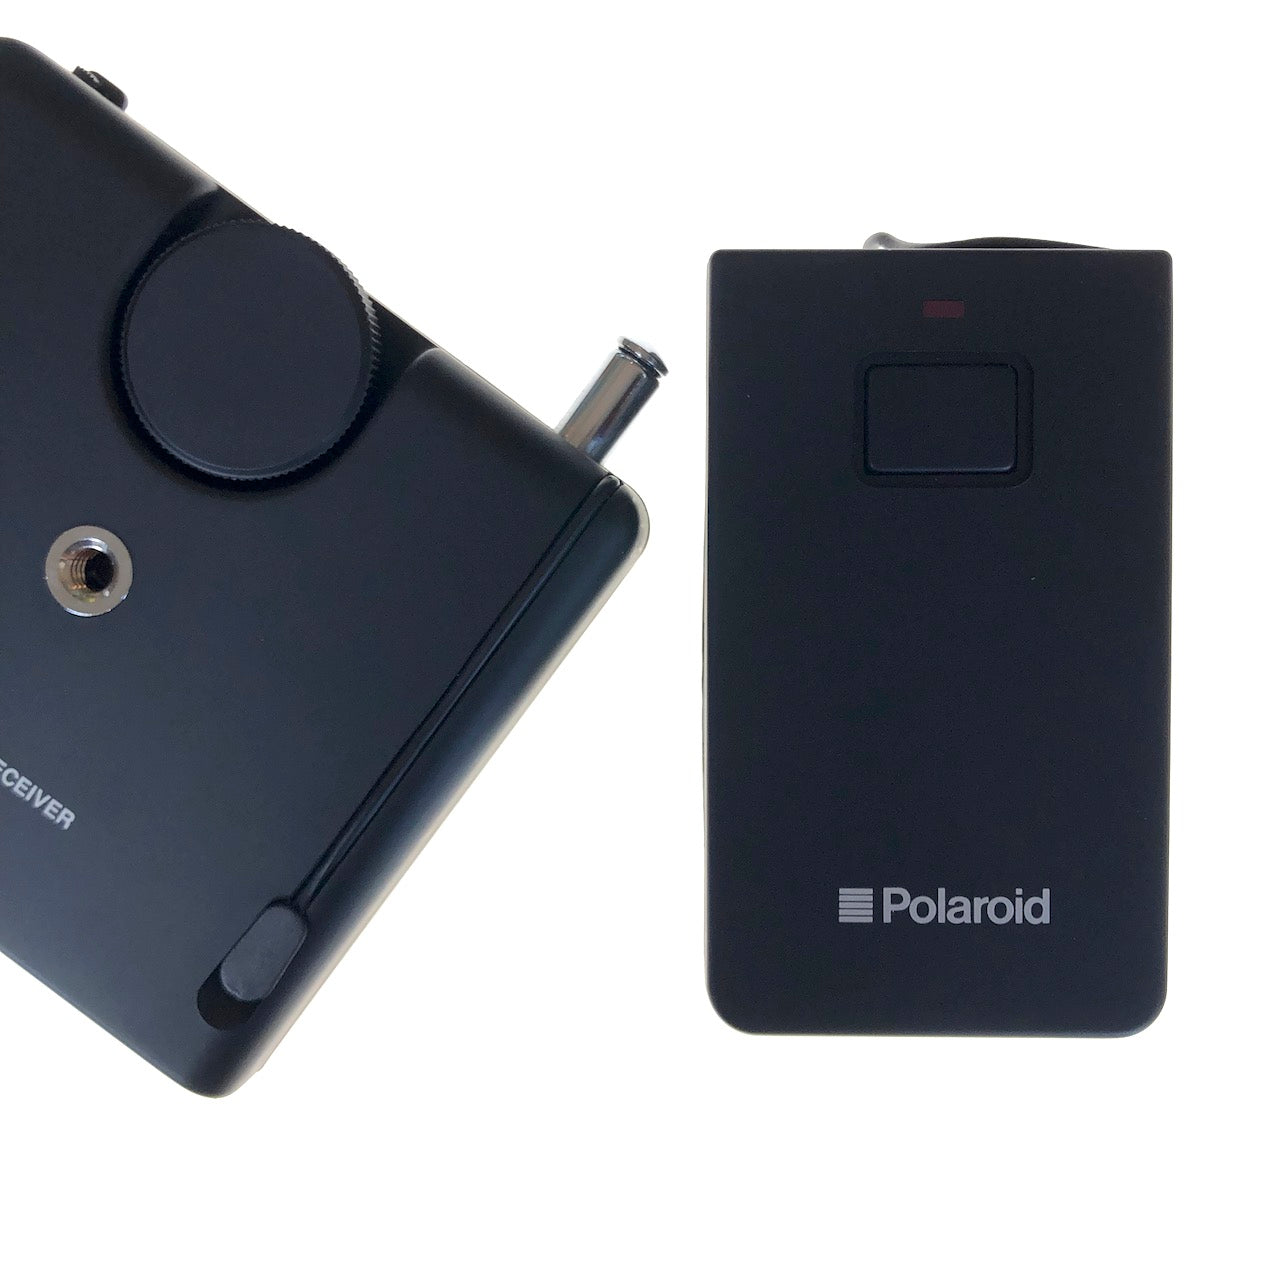 Polaroid Spectra remote control system